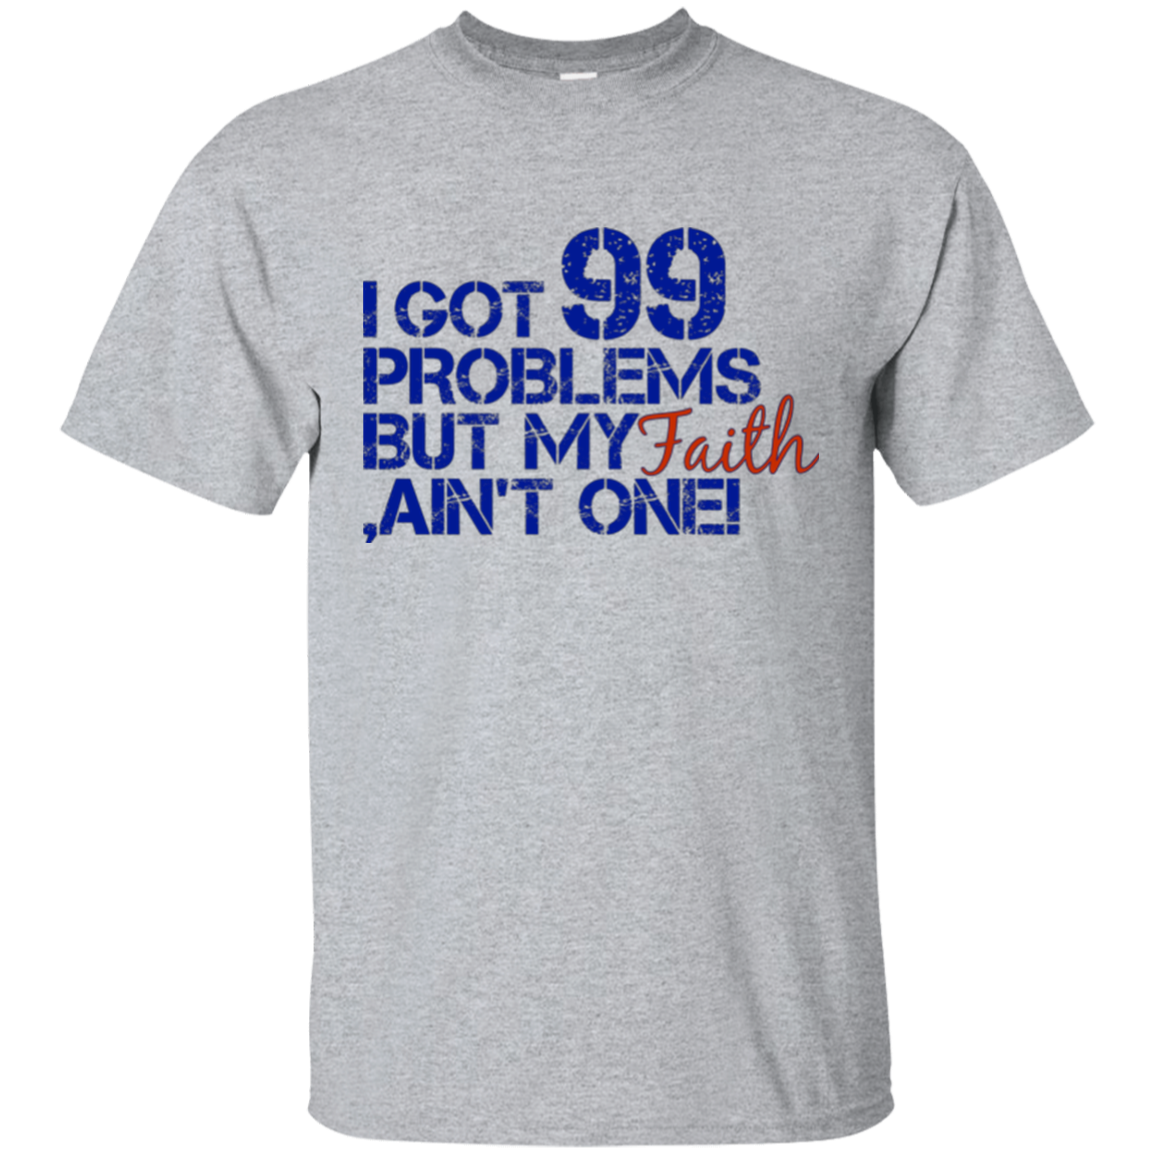 I GOT 99 PROBLEMS BUT FAITH T-SHIRT